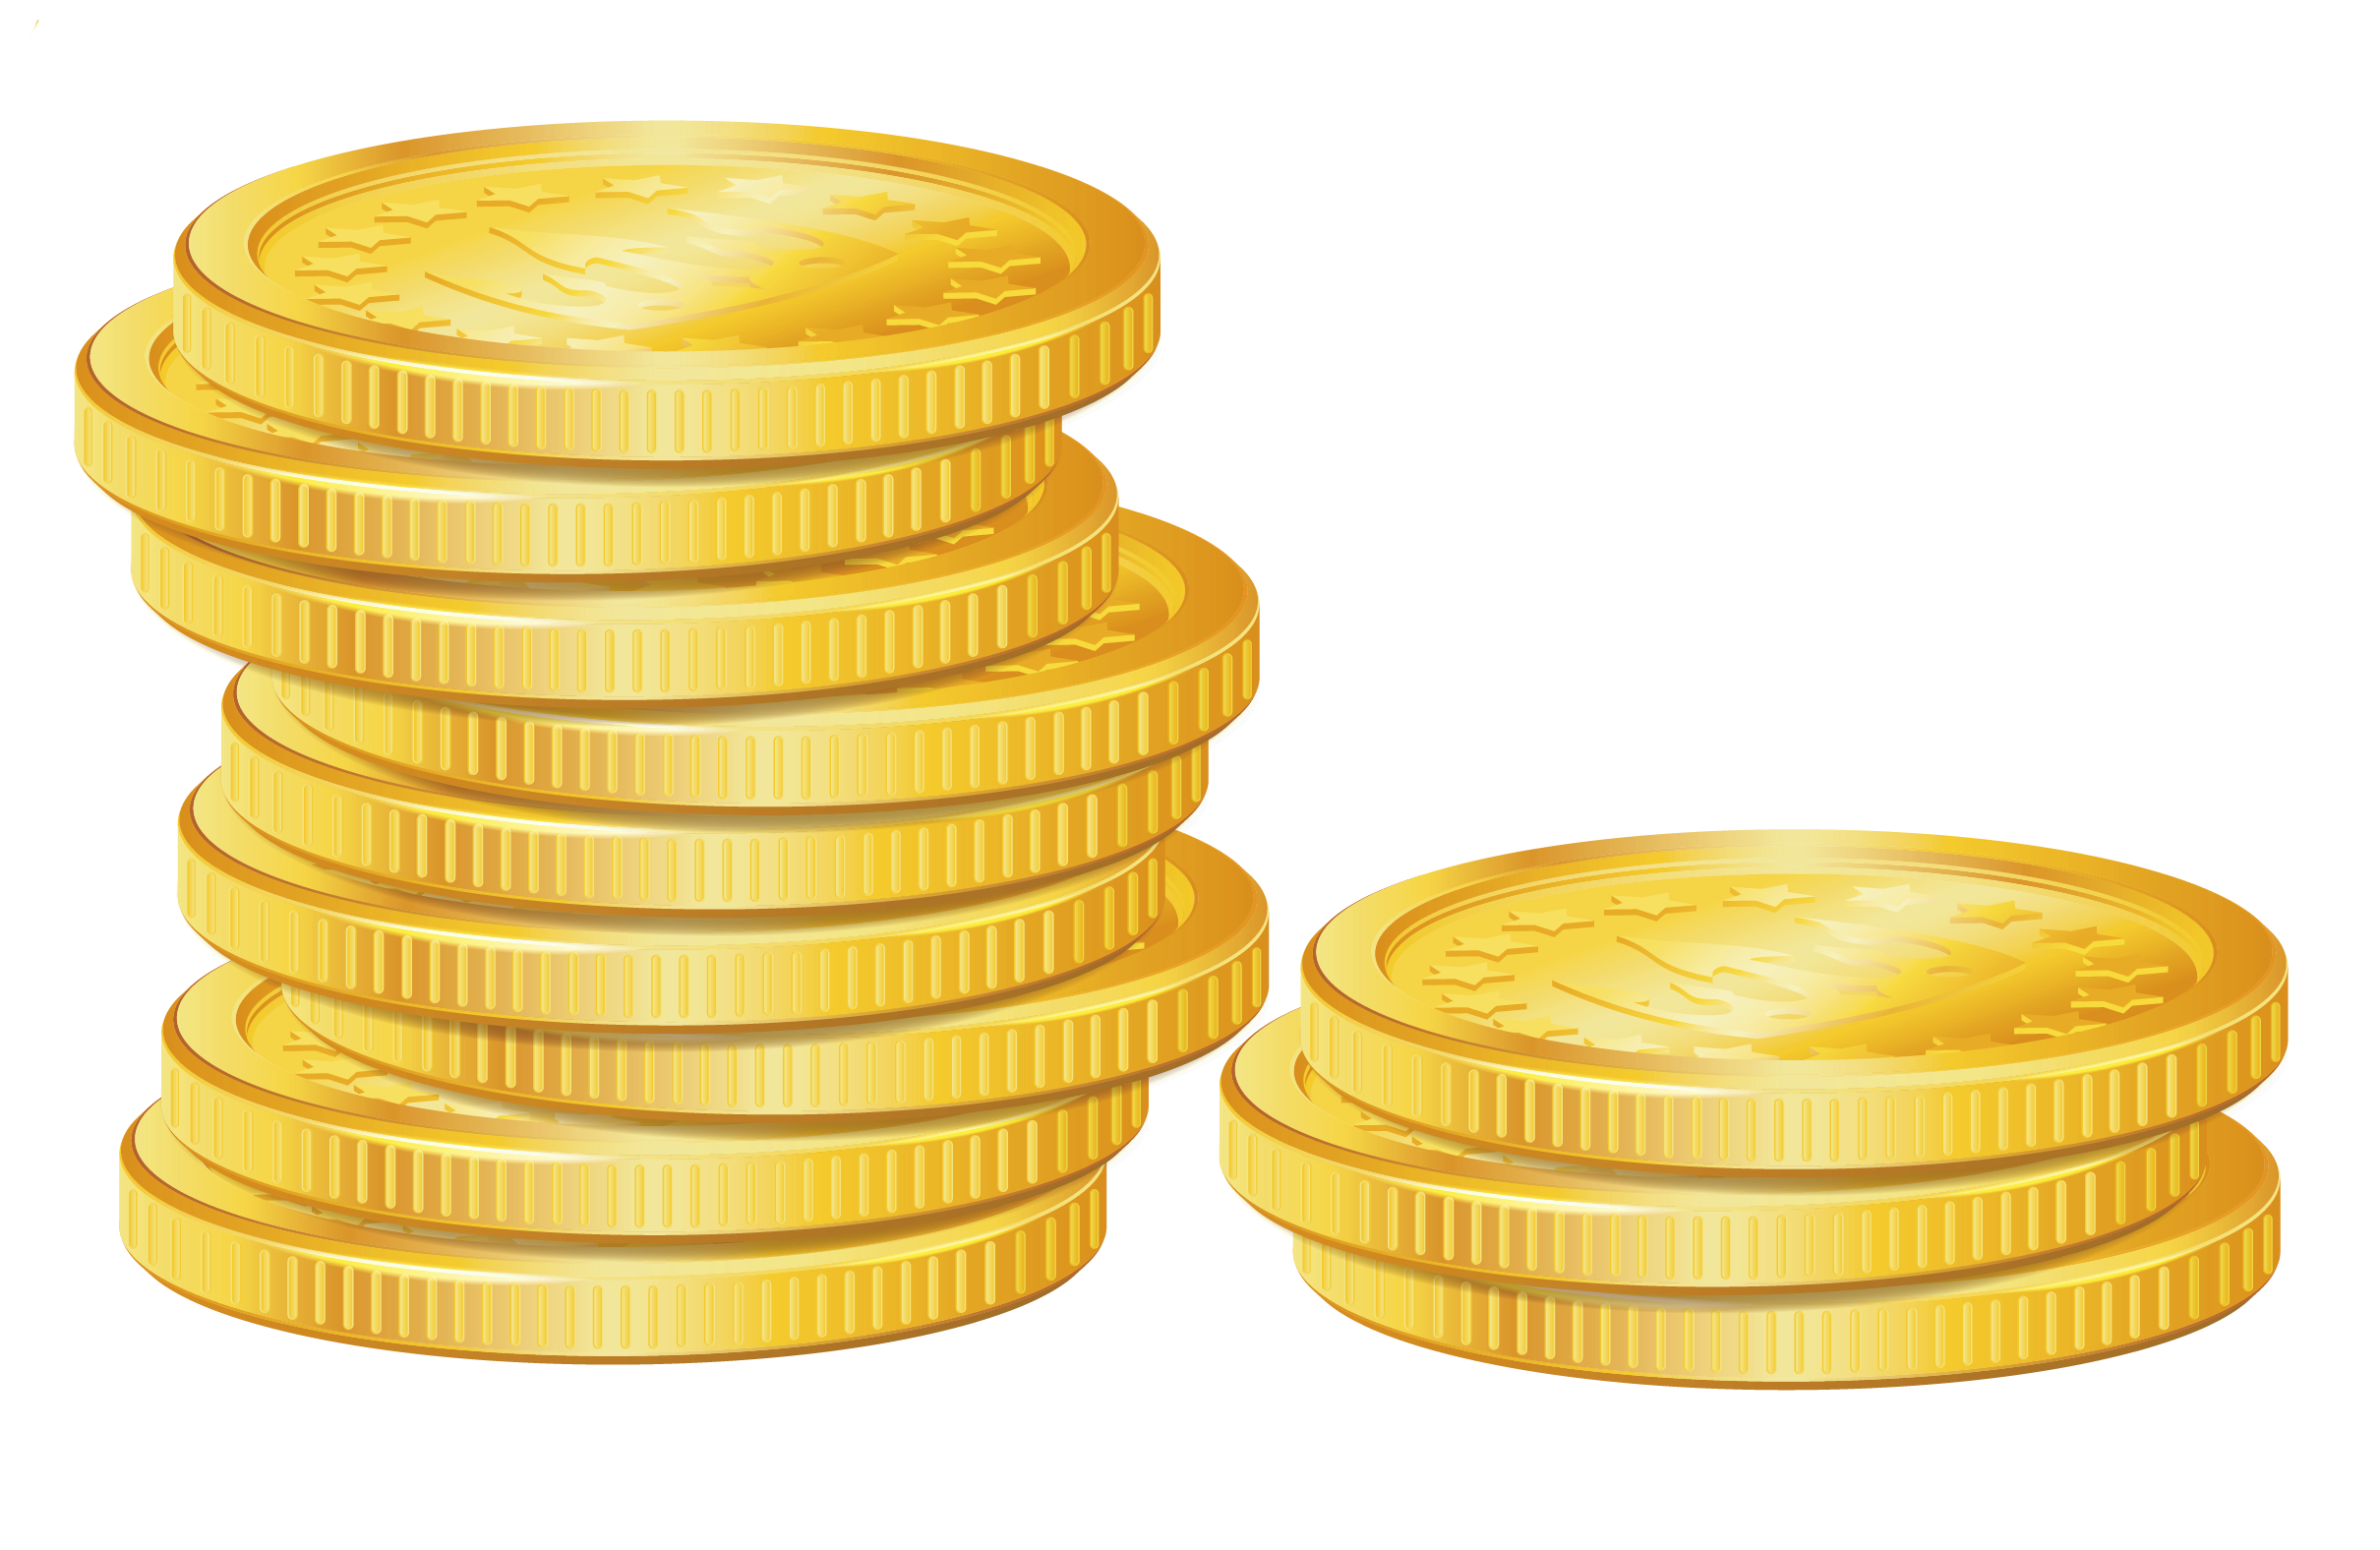 Similar Coins PNG Image